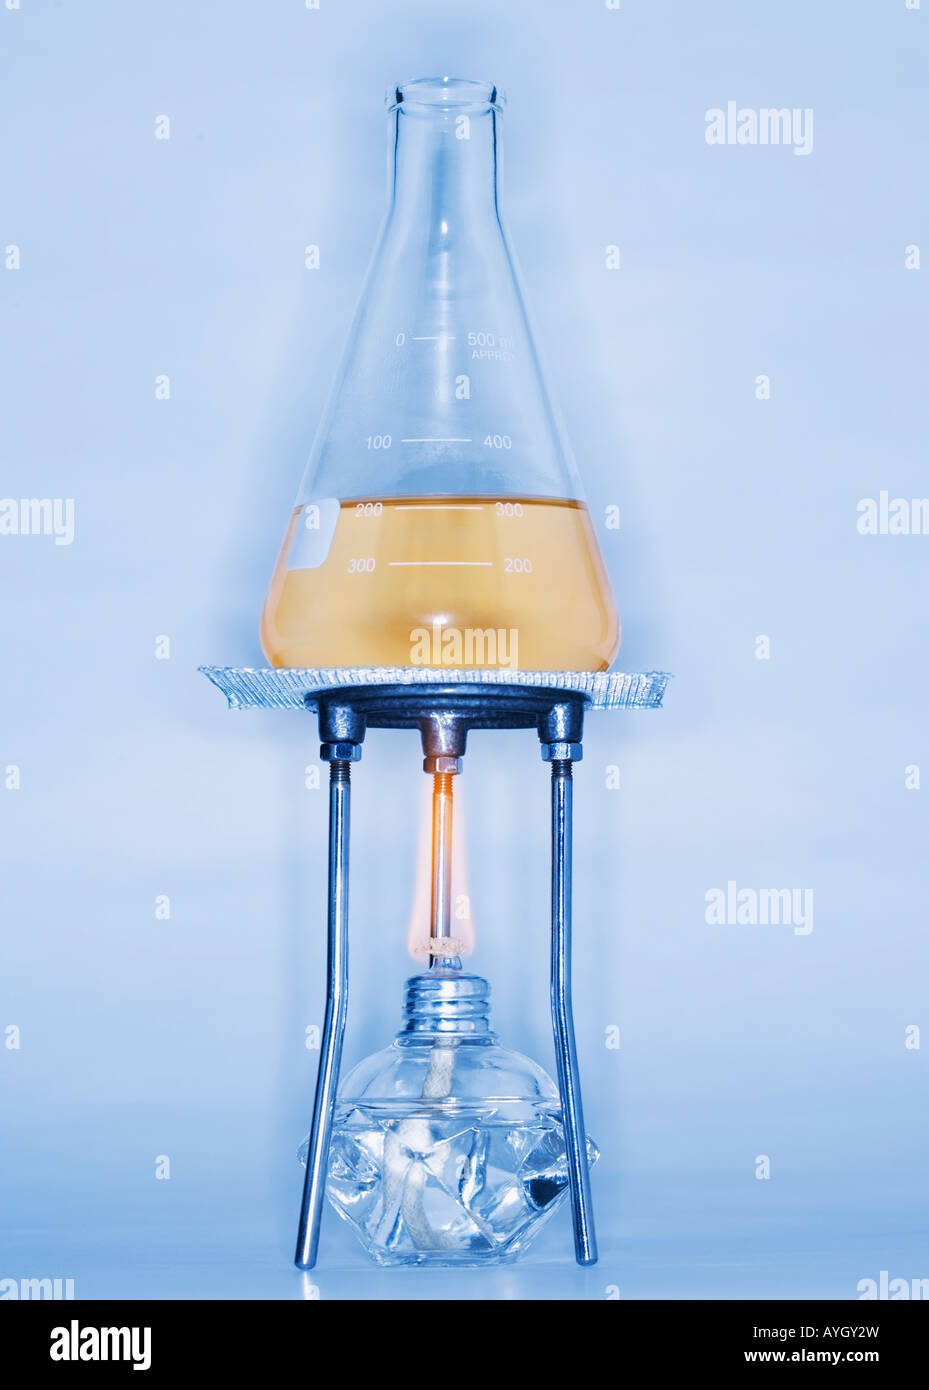 Beaker with liquid on alcohol burner Stock Photo